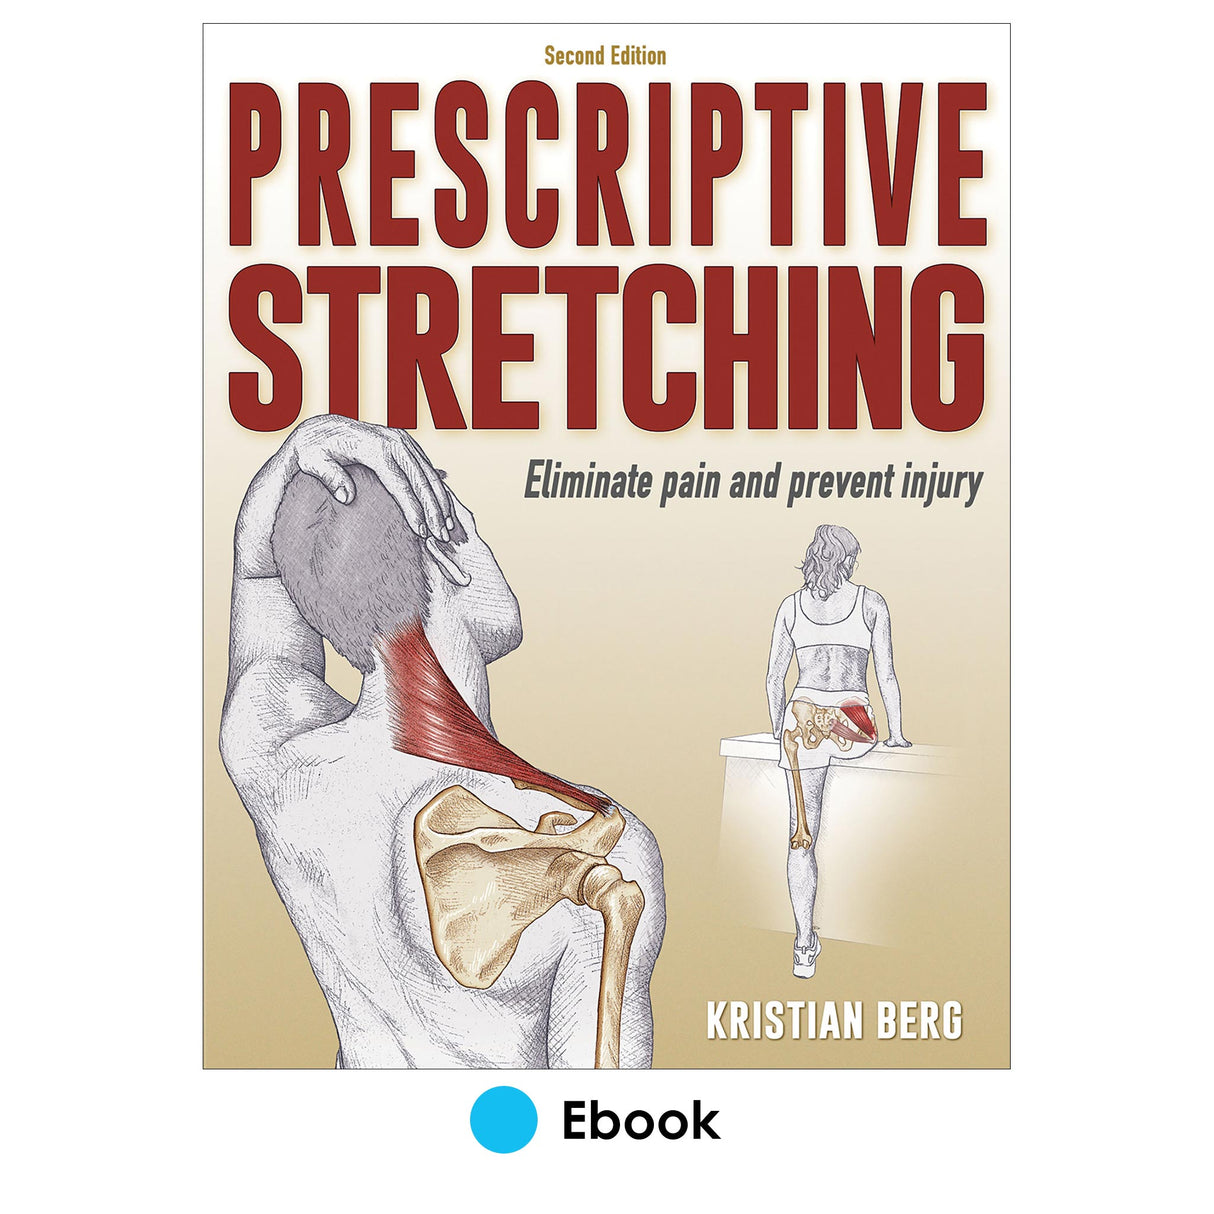 Prescriptive Stretching 2nd Edition epub